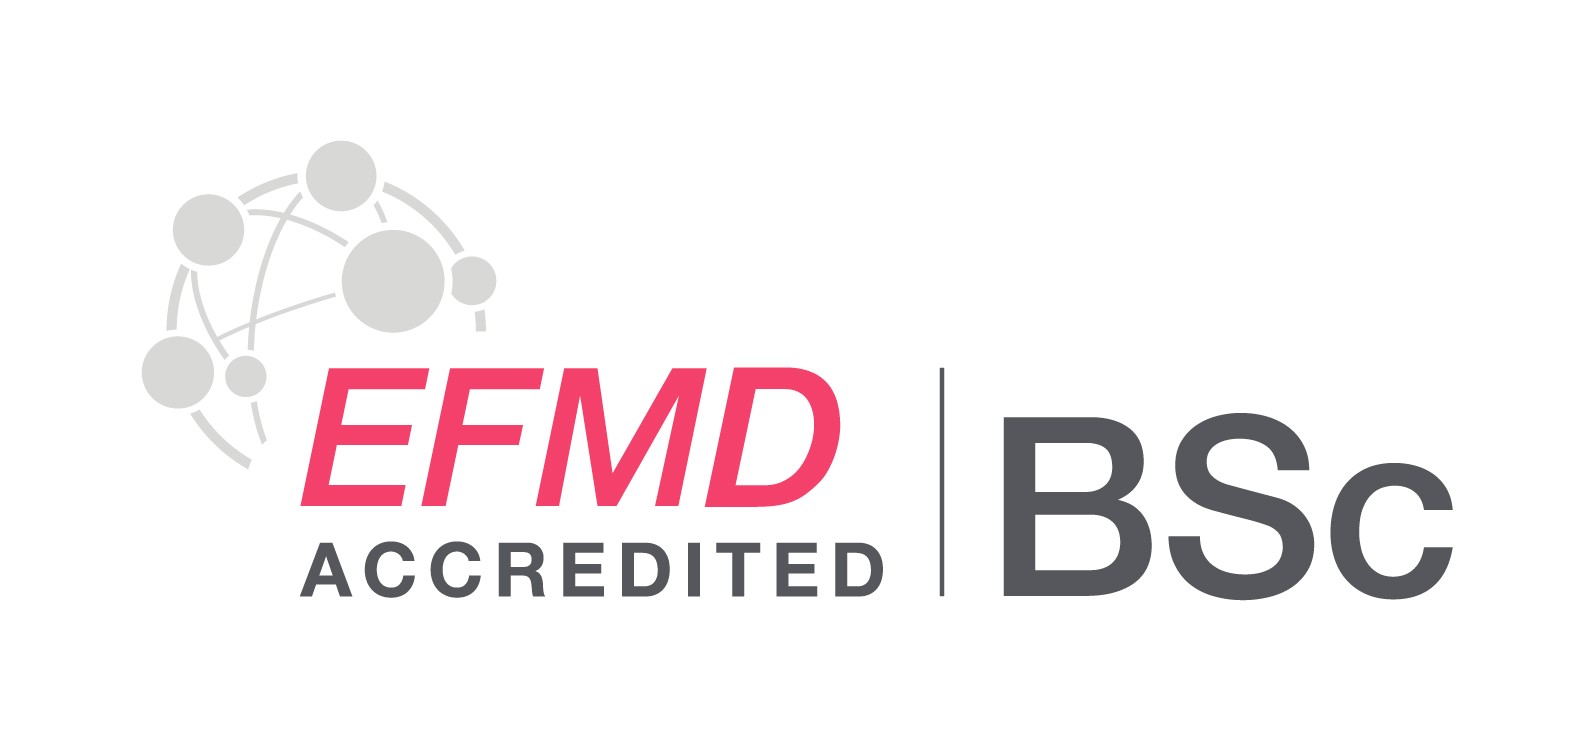 Akkreditiert durch EFMD Global